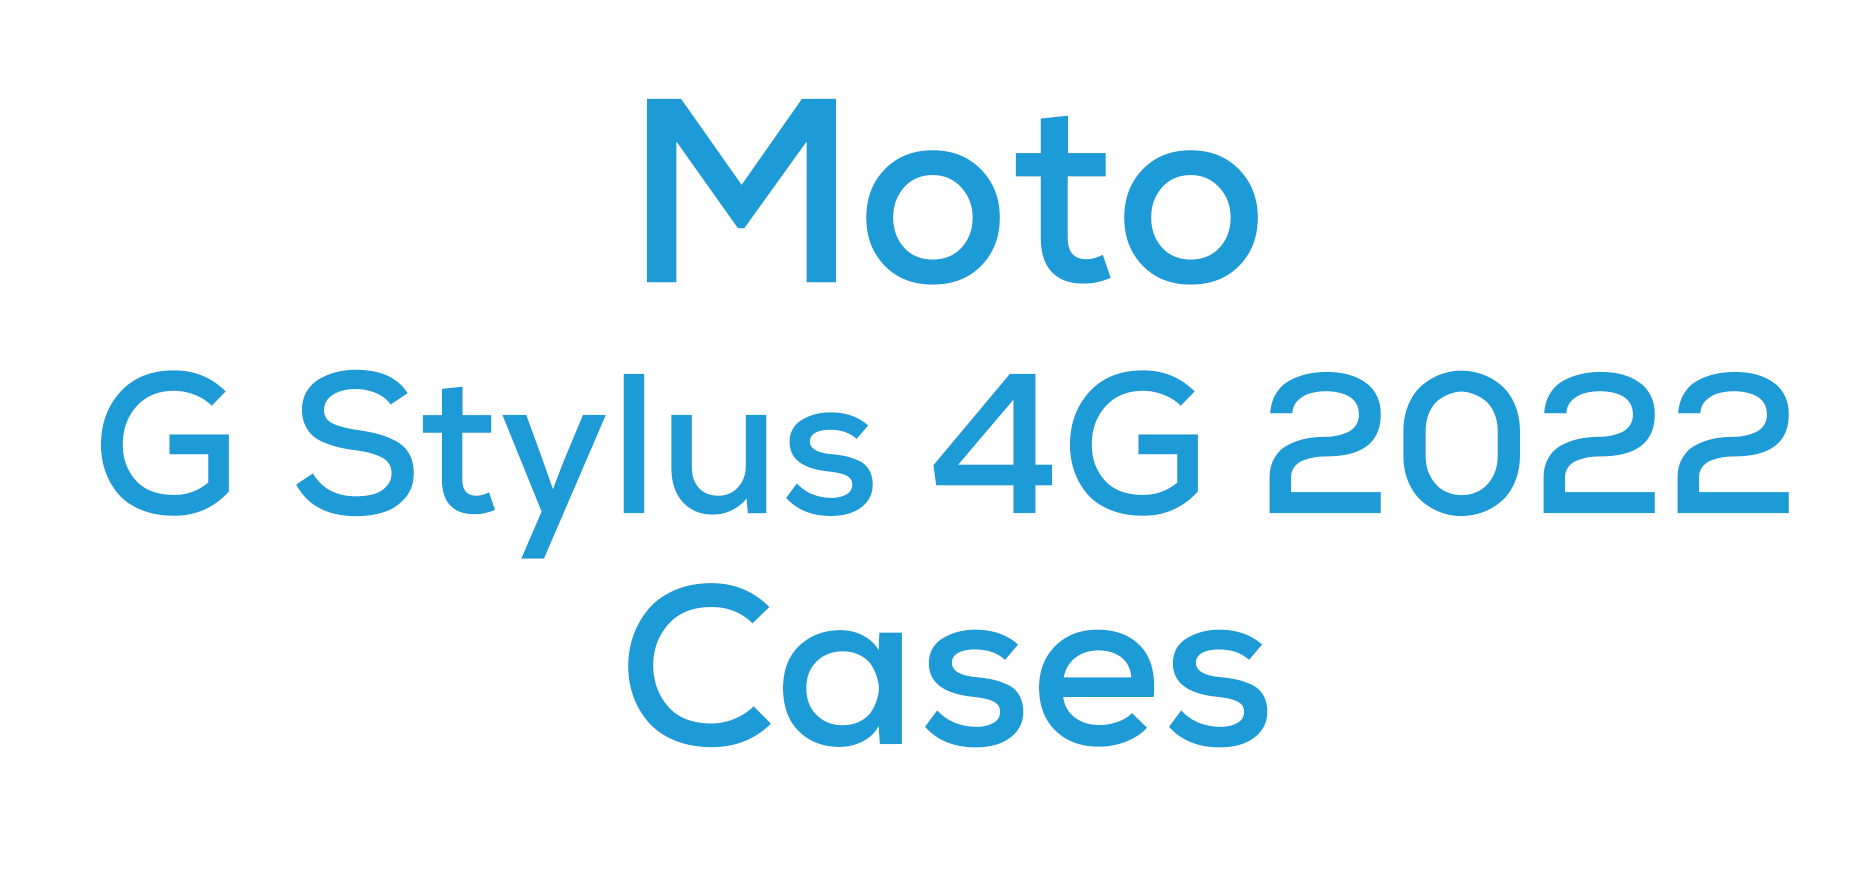 Moto G Stylus 4G 2022 Cases